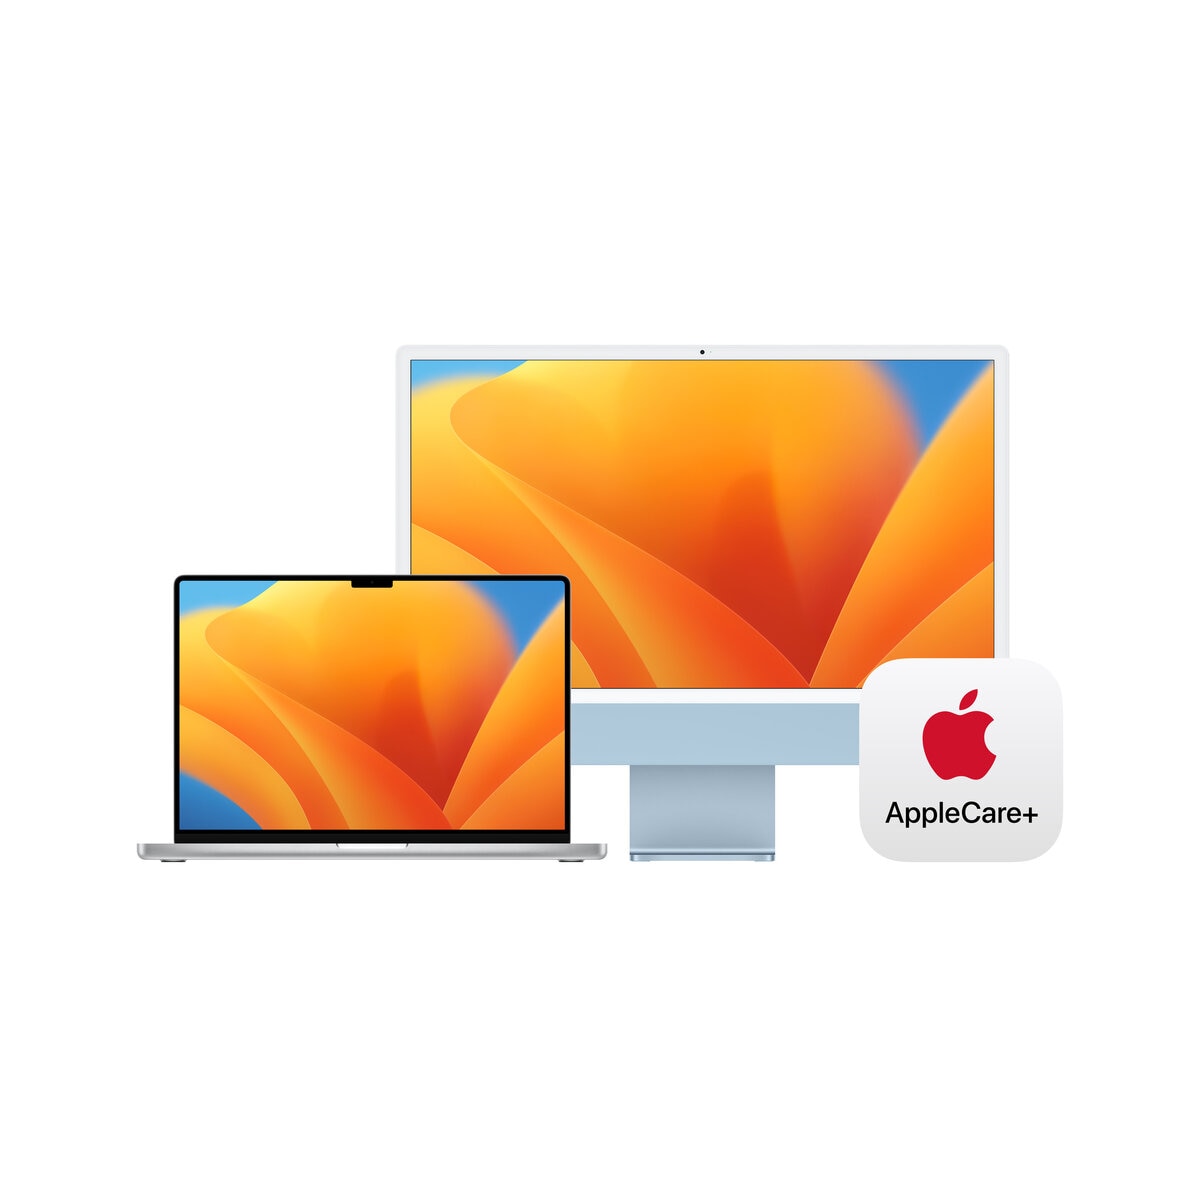 AppleCare+ iMac用 | Costco Japan